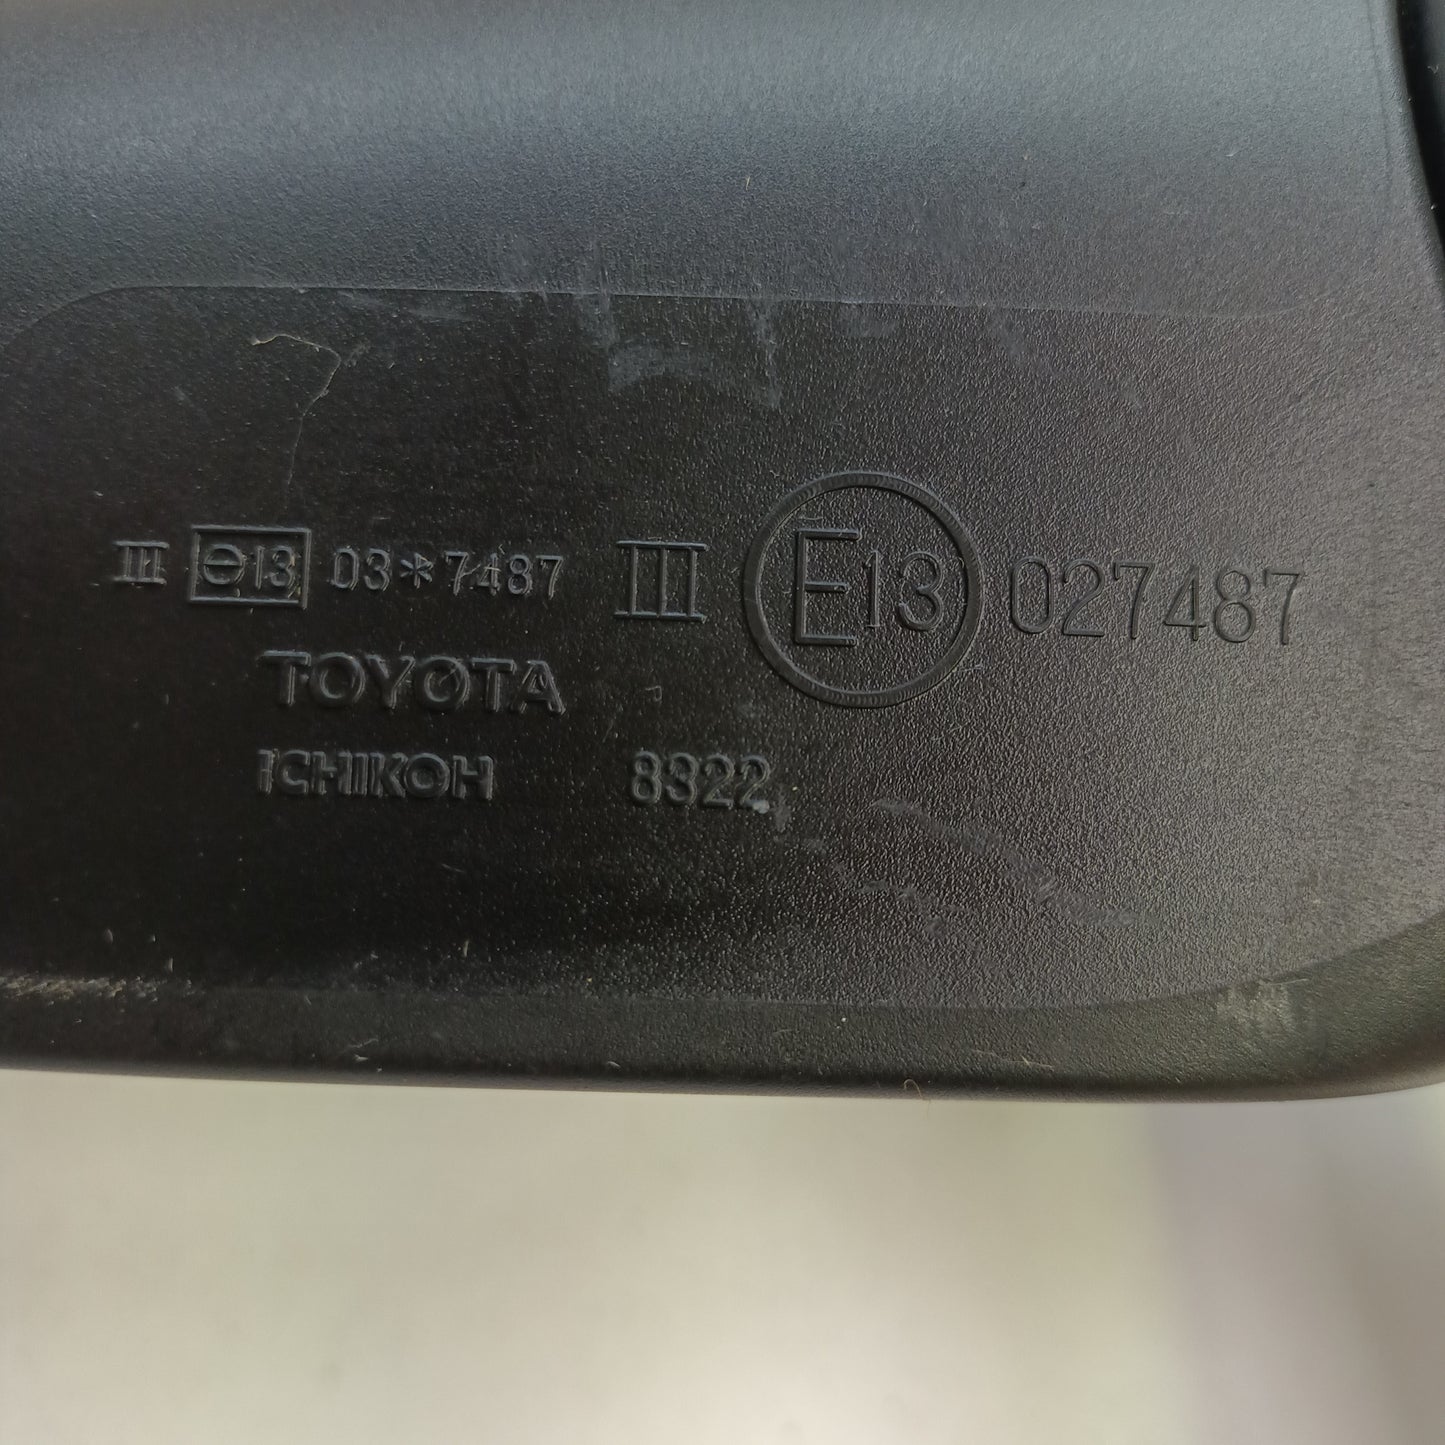 Toyota Yaris Hatchback Door Mirror Right Side 2012 2013 2014 2015 2016 2017 2018